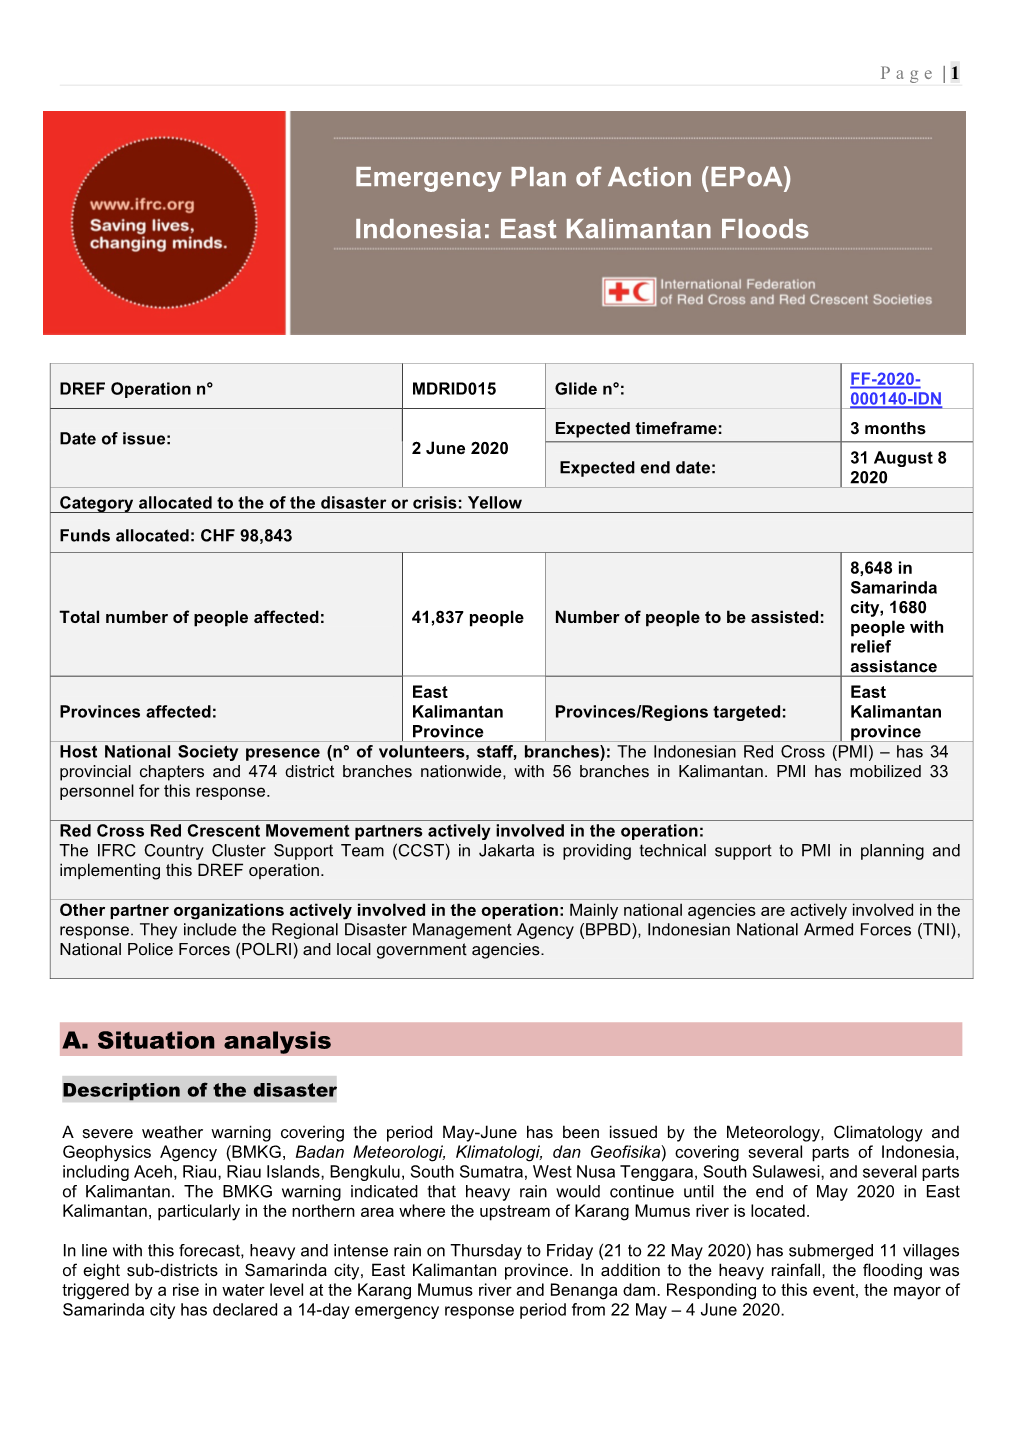 Emergency Plan of Action (Epoa) Indonesia: East Kalimantan Floods